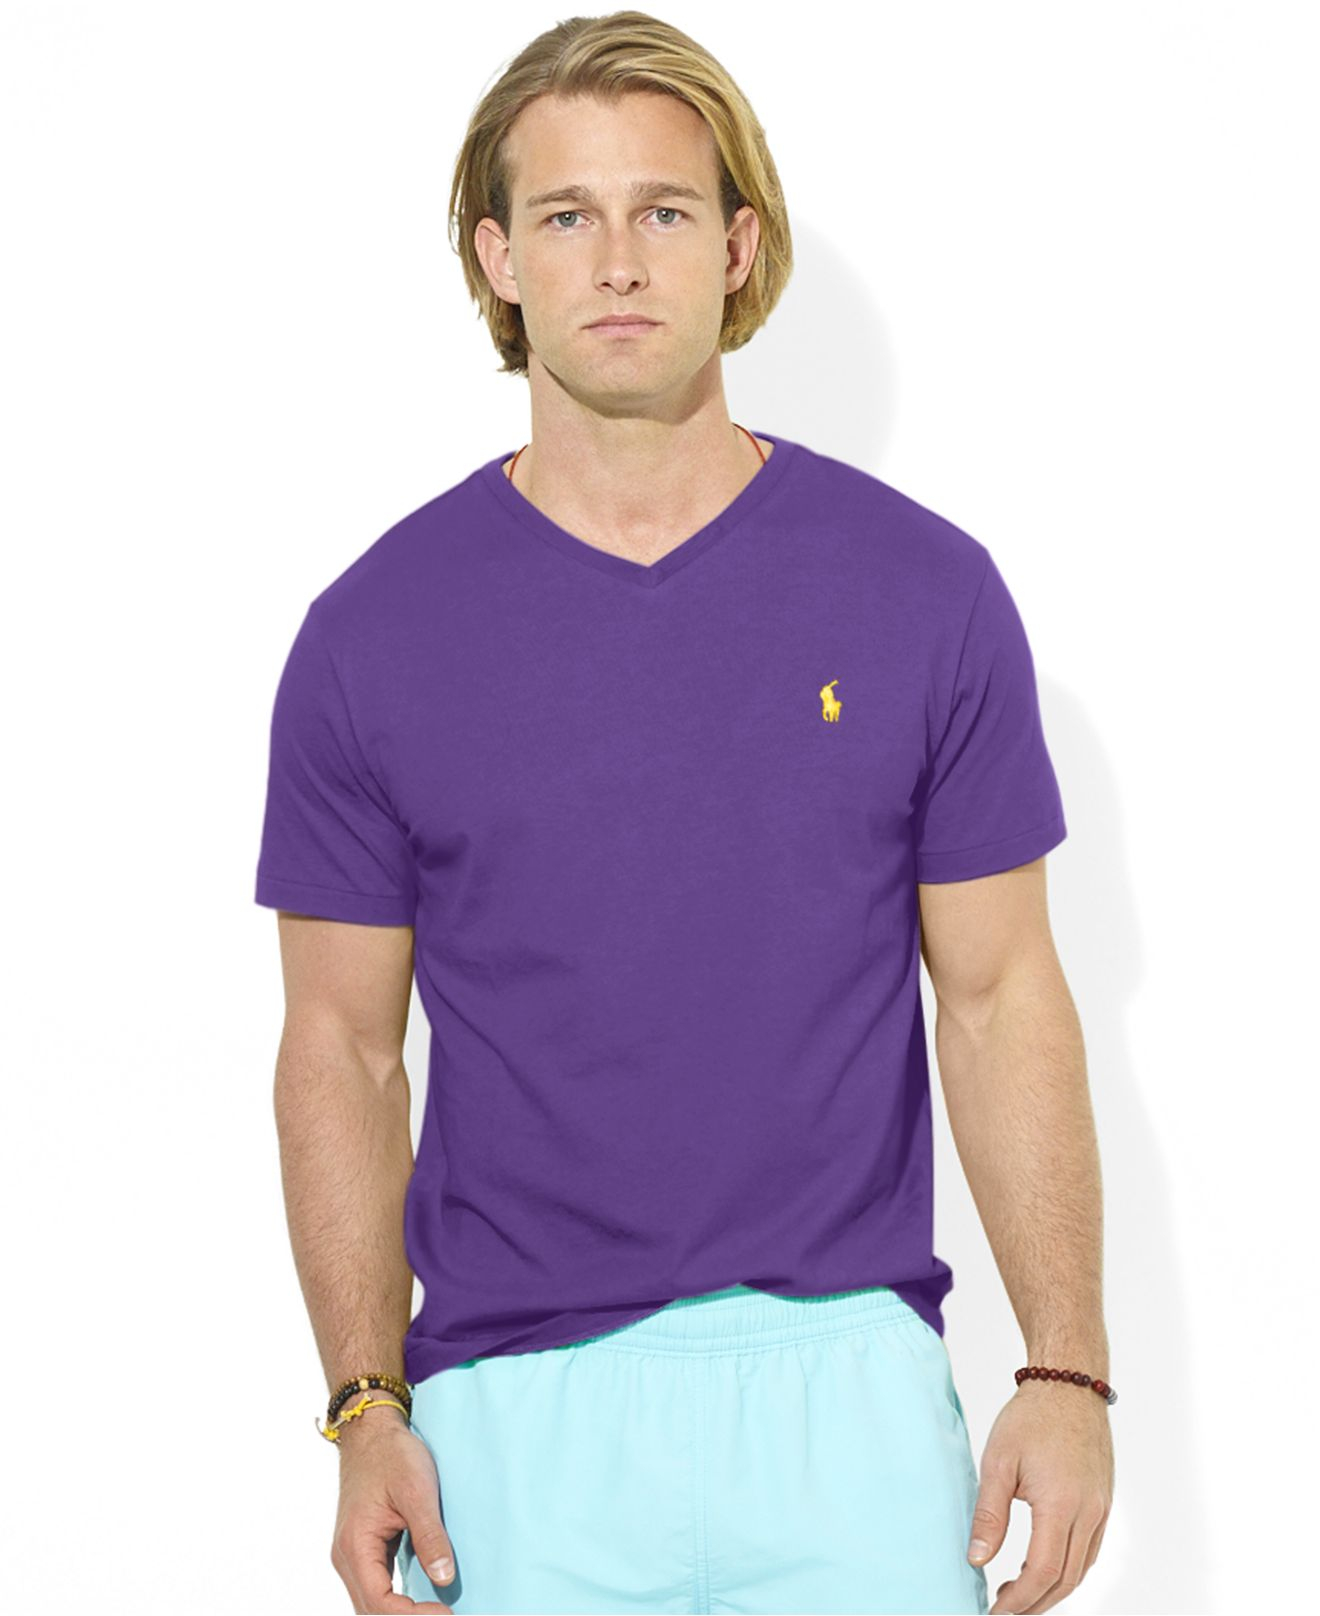 Lyst - Polo ralph lauren Polo Jersey Vneck Shirt in Purple for Men